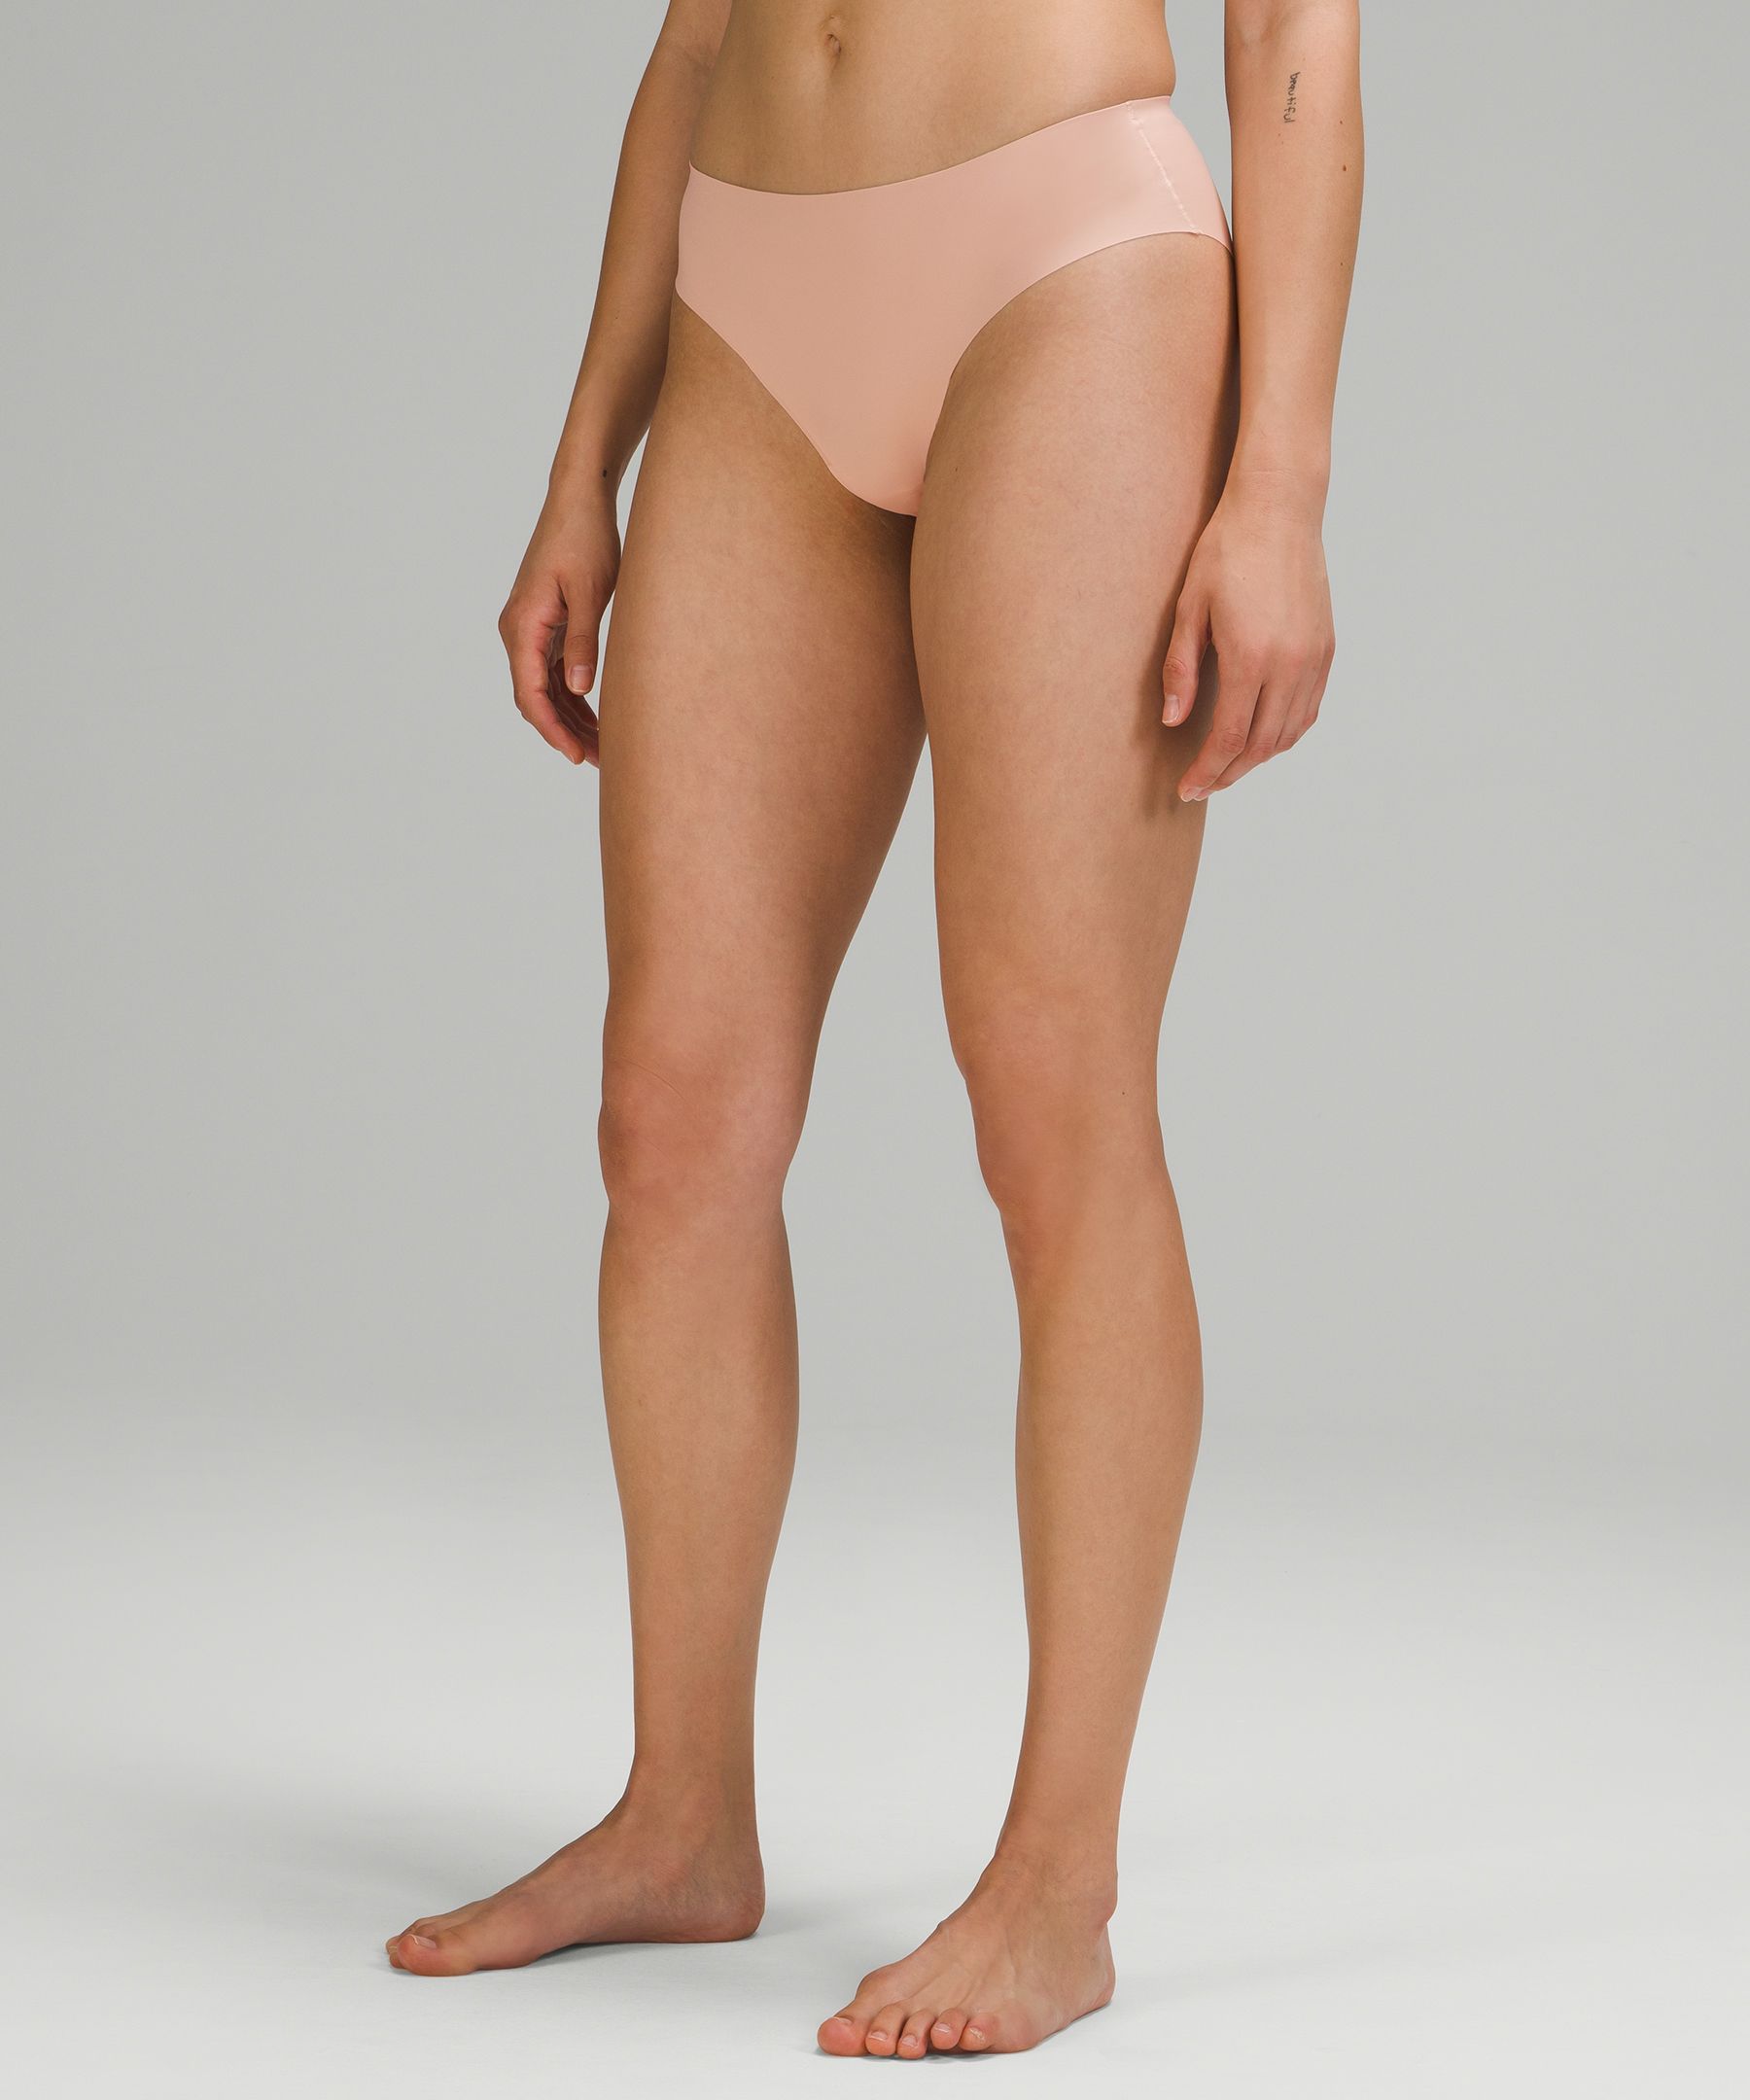 InvisiWear Mid-Rise Bikini Underwear, Women's Underwear